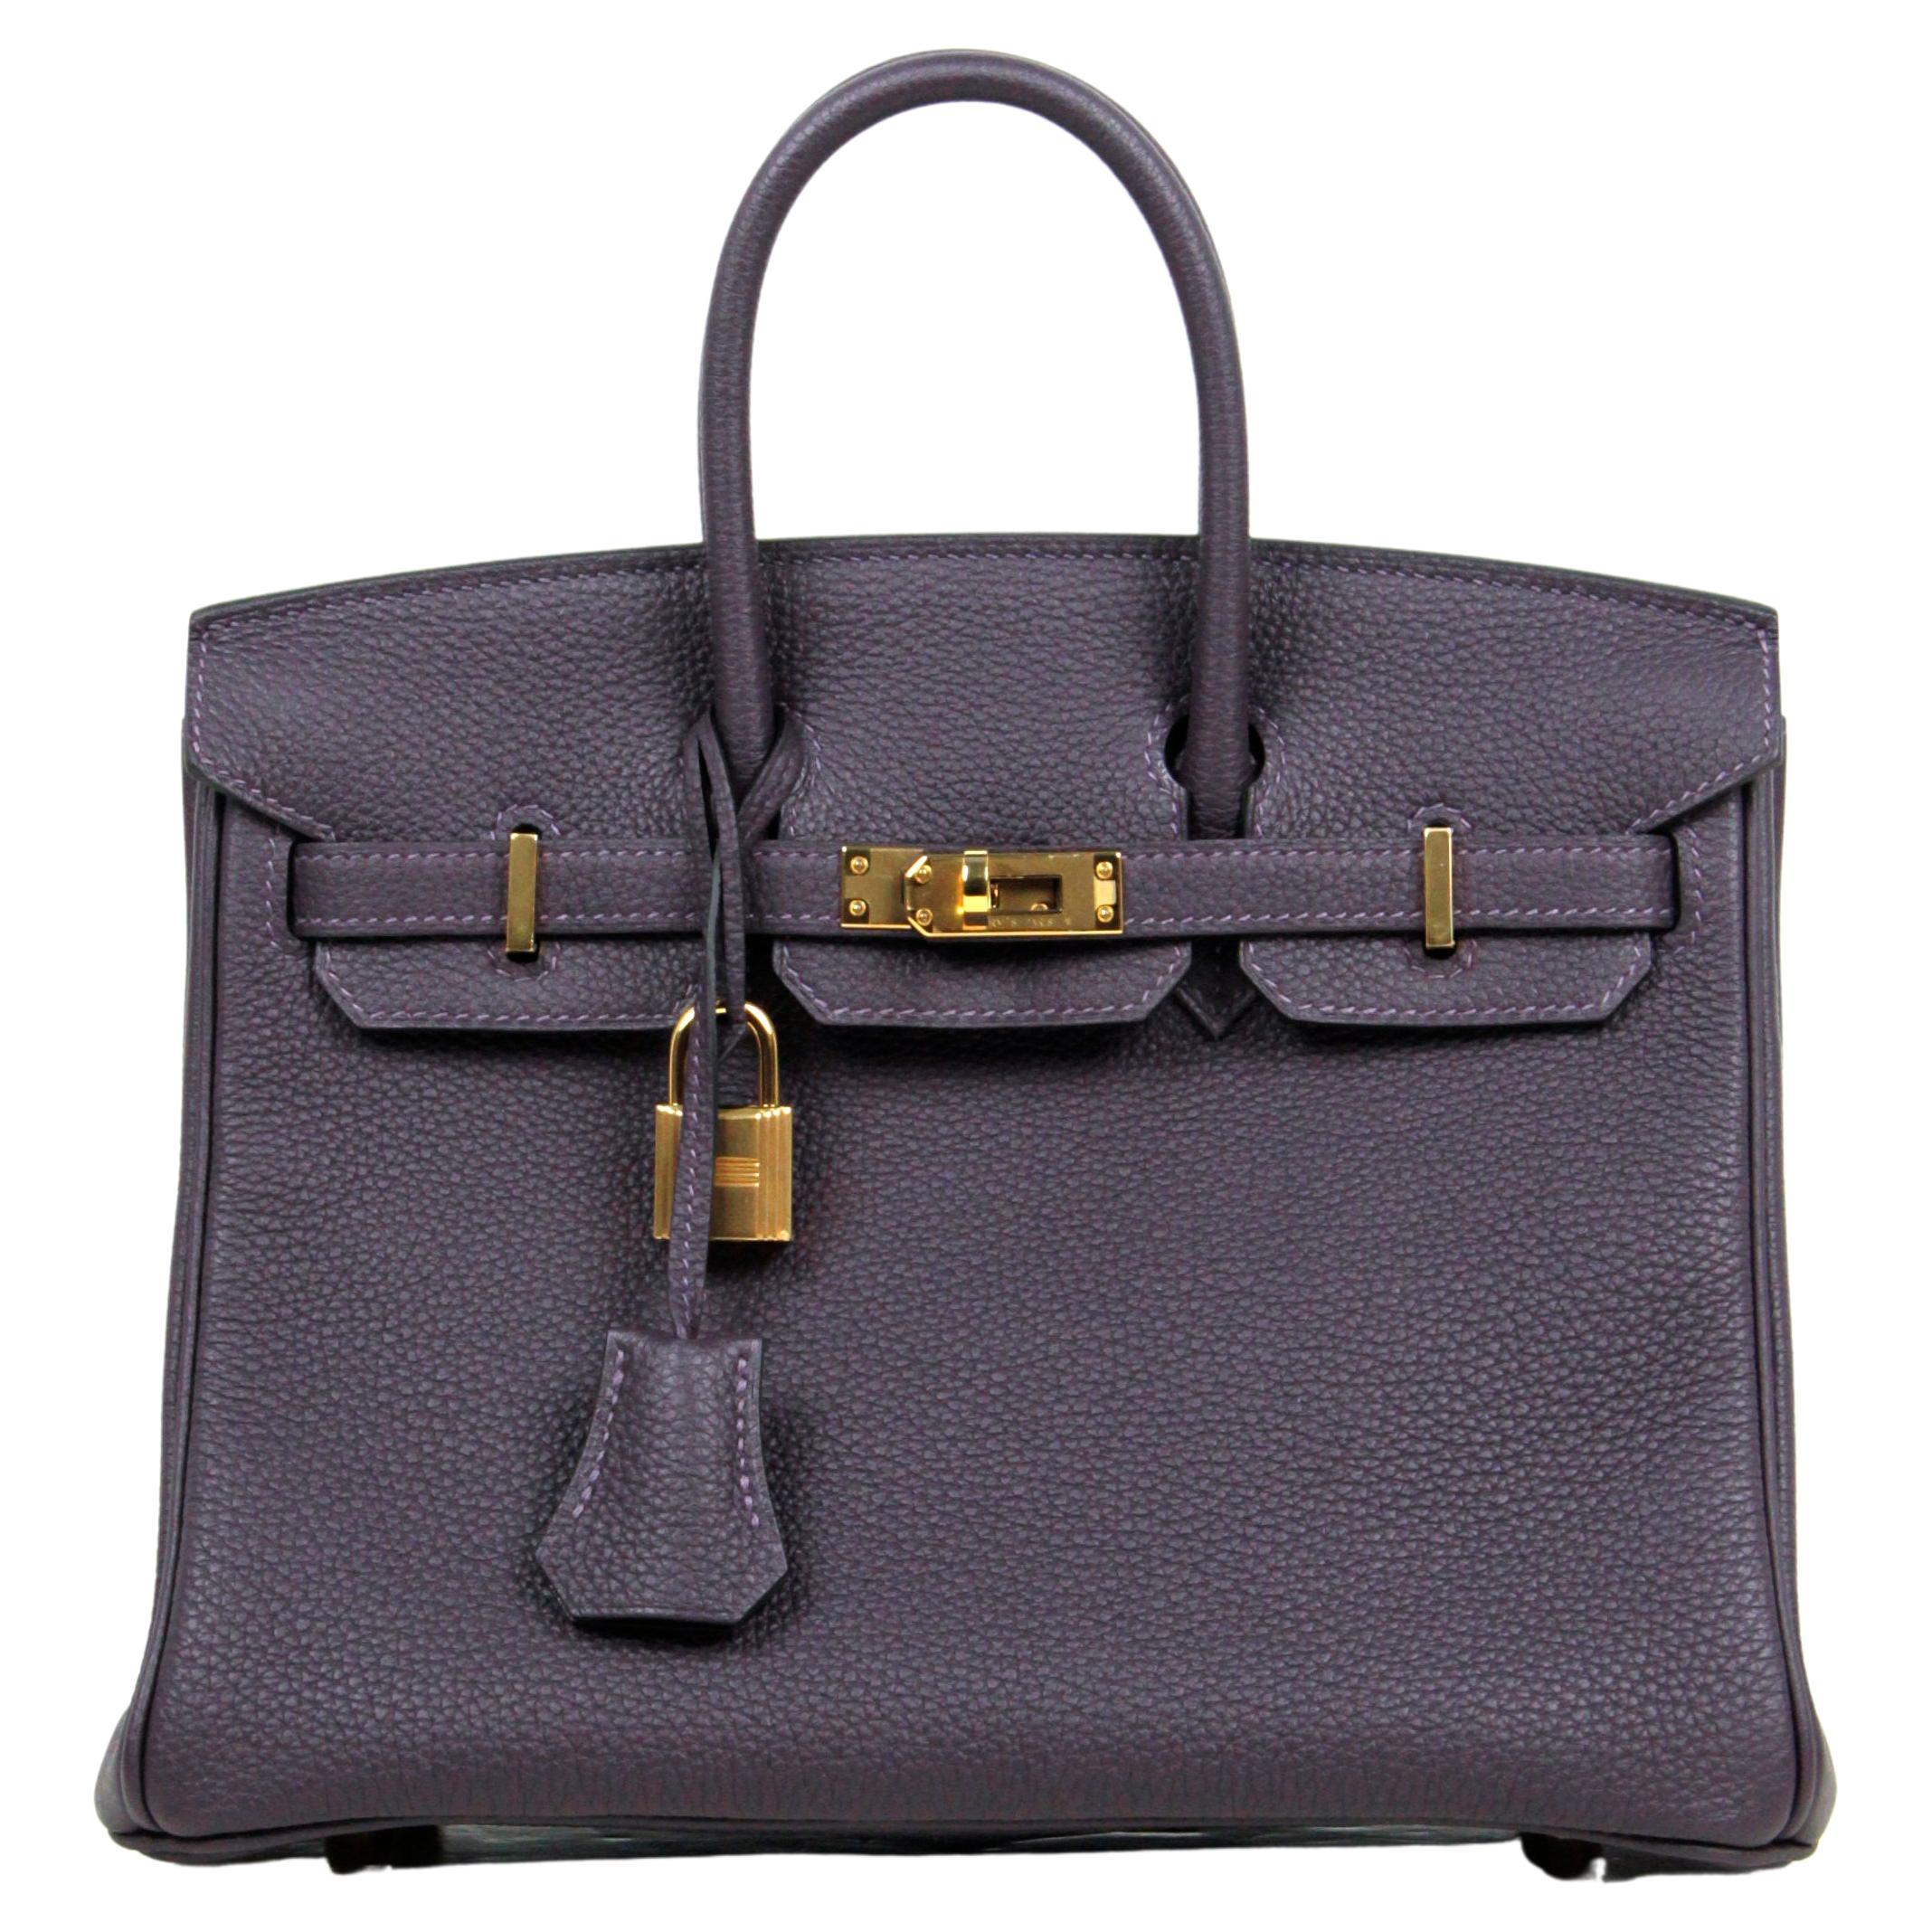 Hermes Raisin Purple Togo Leather 25cm Birkin Bag w/ Box, Dustbag & Raincoat 